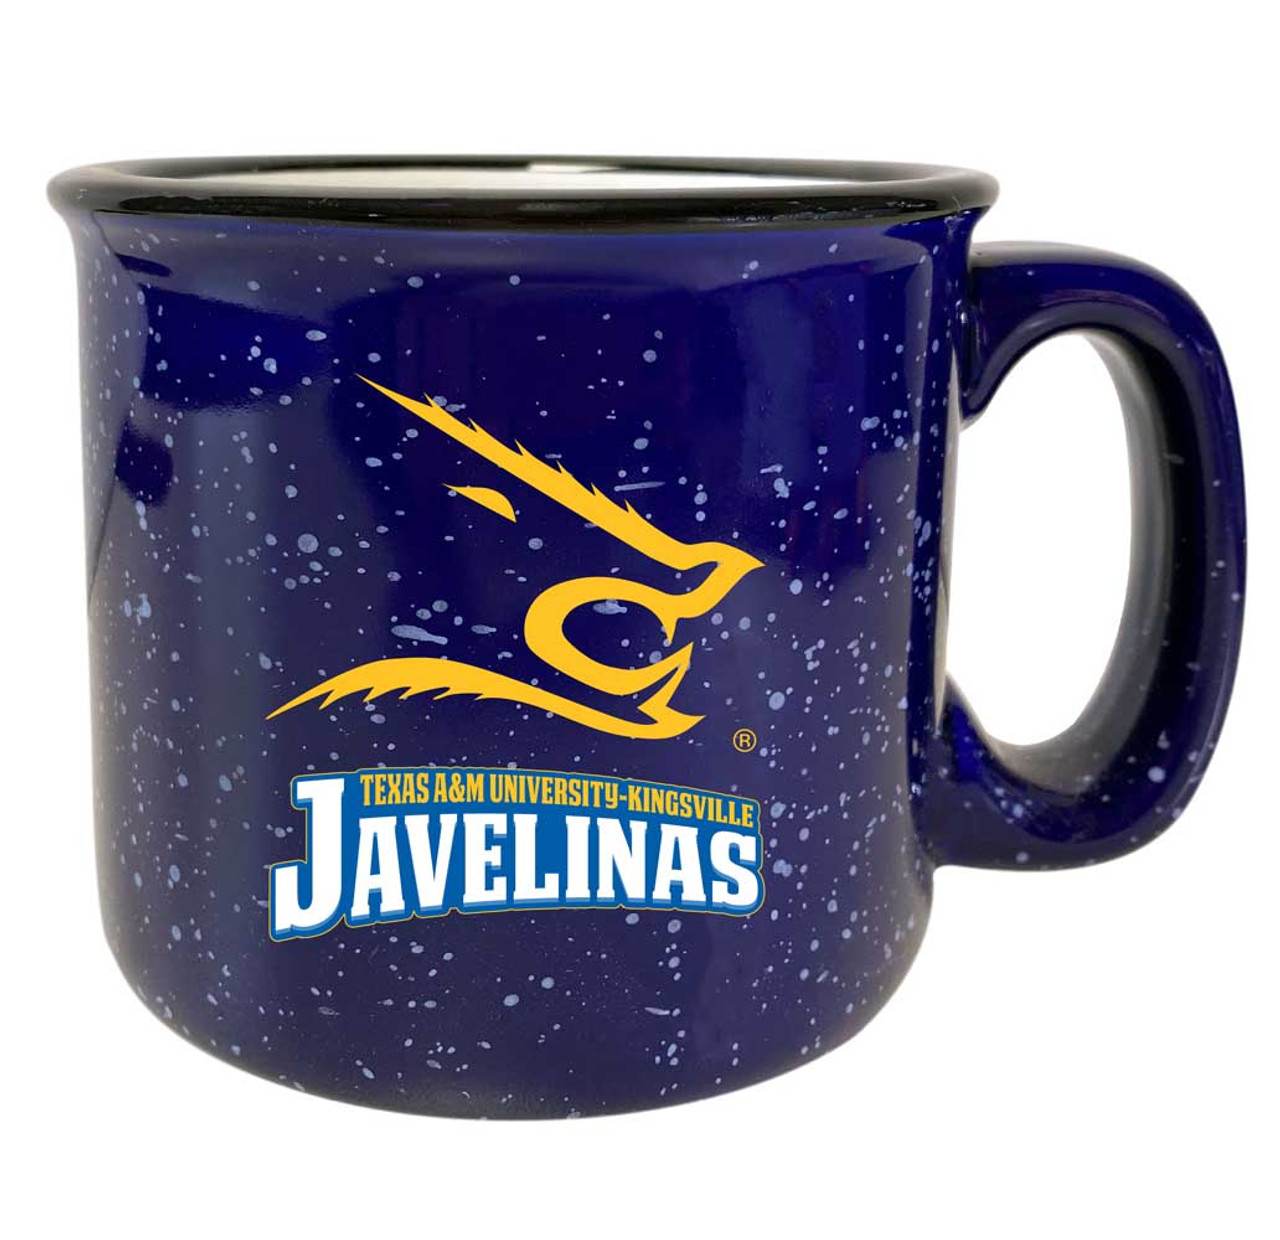 Texas A&M Kingsville Javelinas Speckled Ceramic Camper Coffee Mug (Choose Your Color).